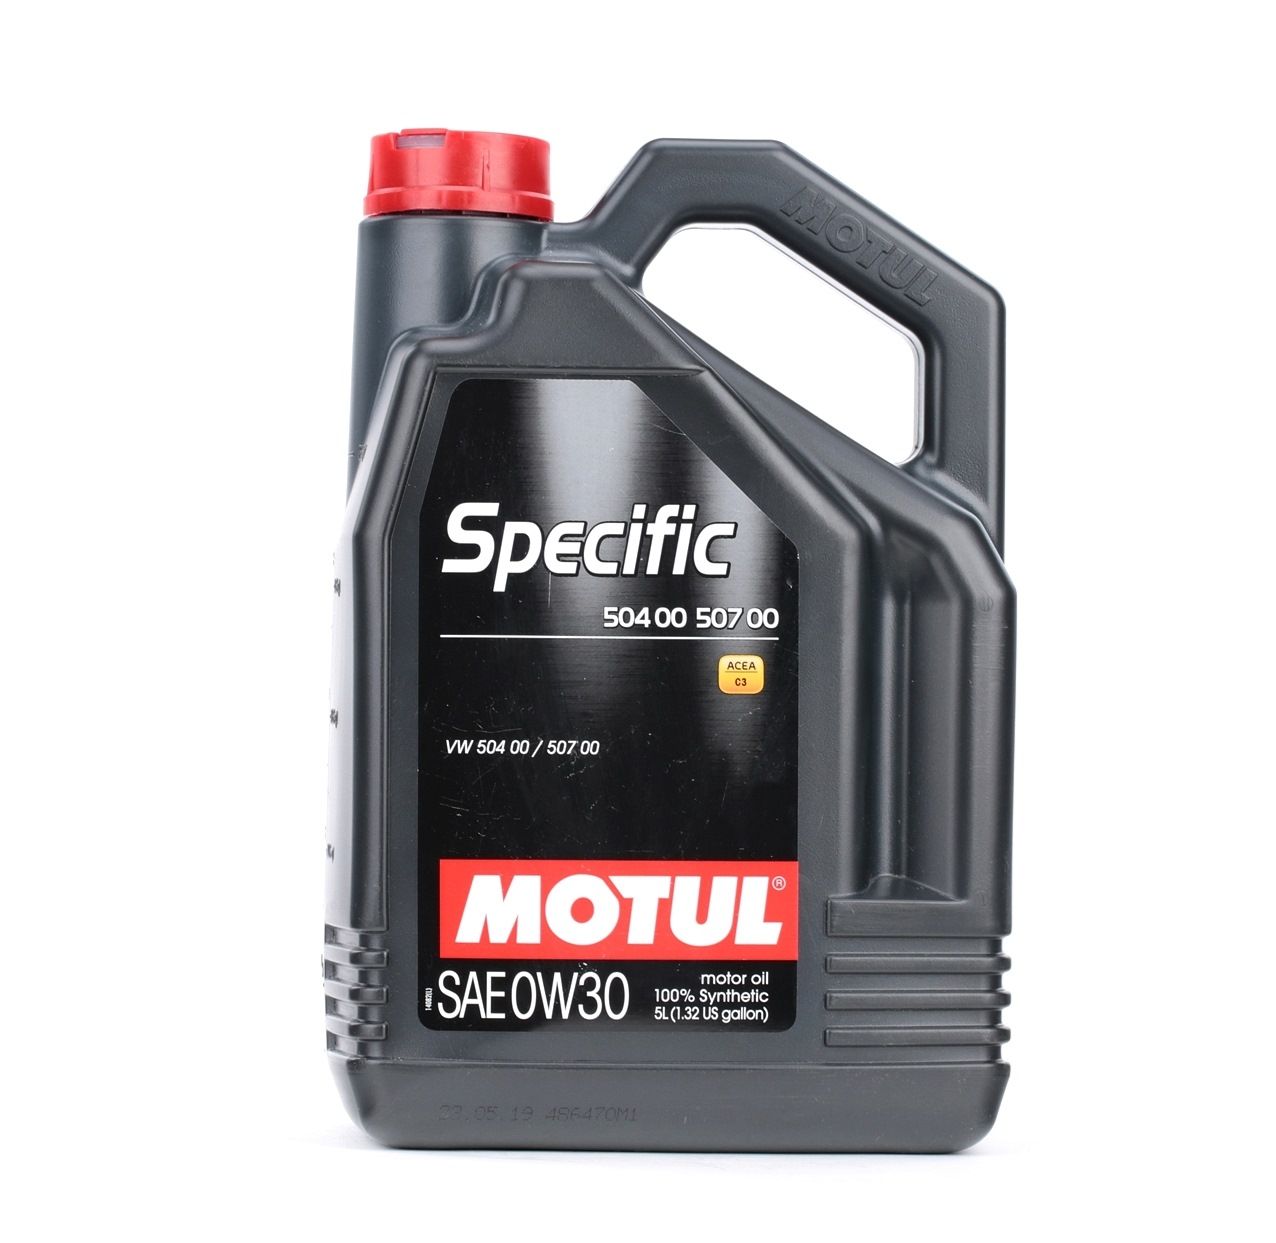 MOTUL SPECIFIC, 504 00 507 00 107050 Aceite de motor 0W-30, 5L, Aceite sintetico